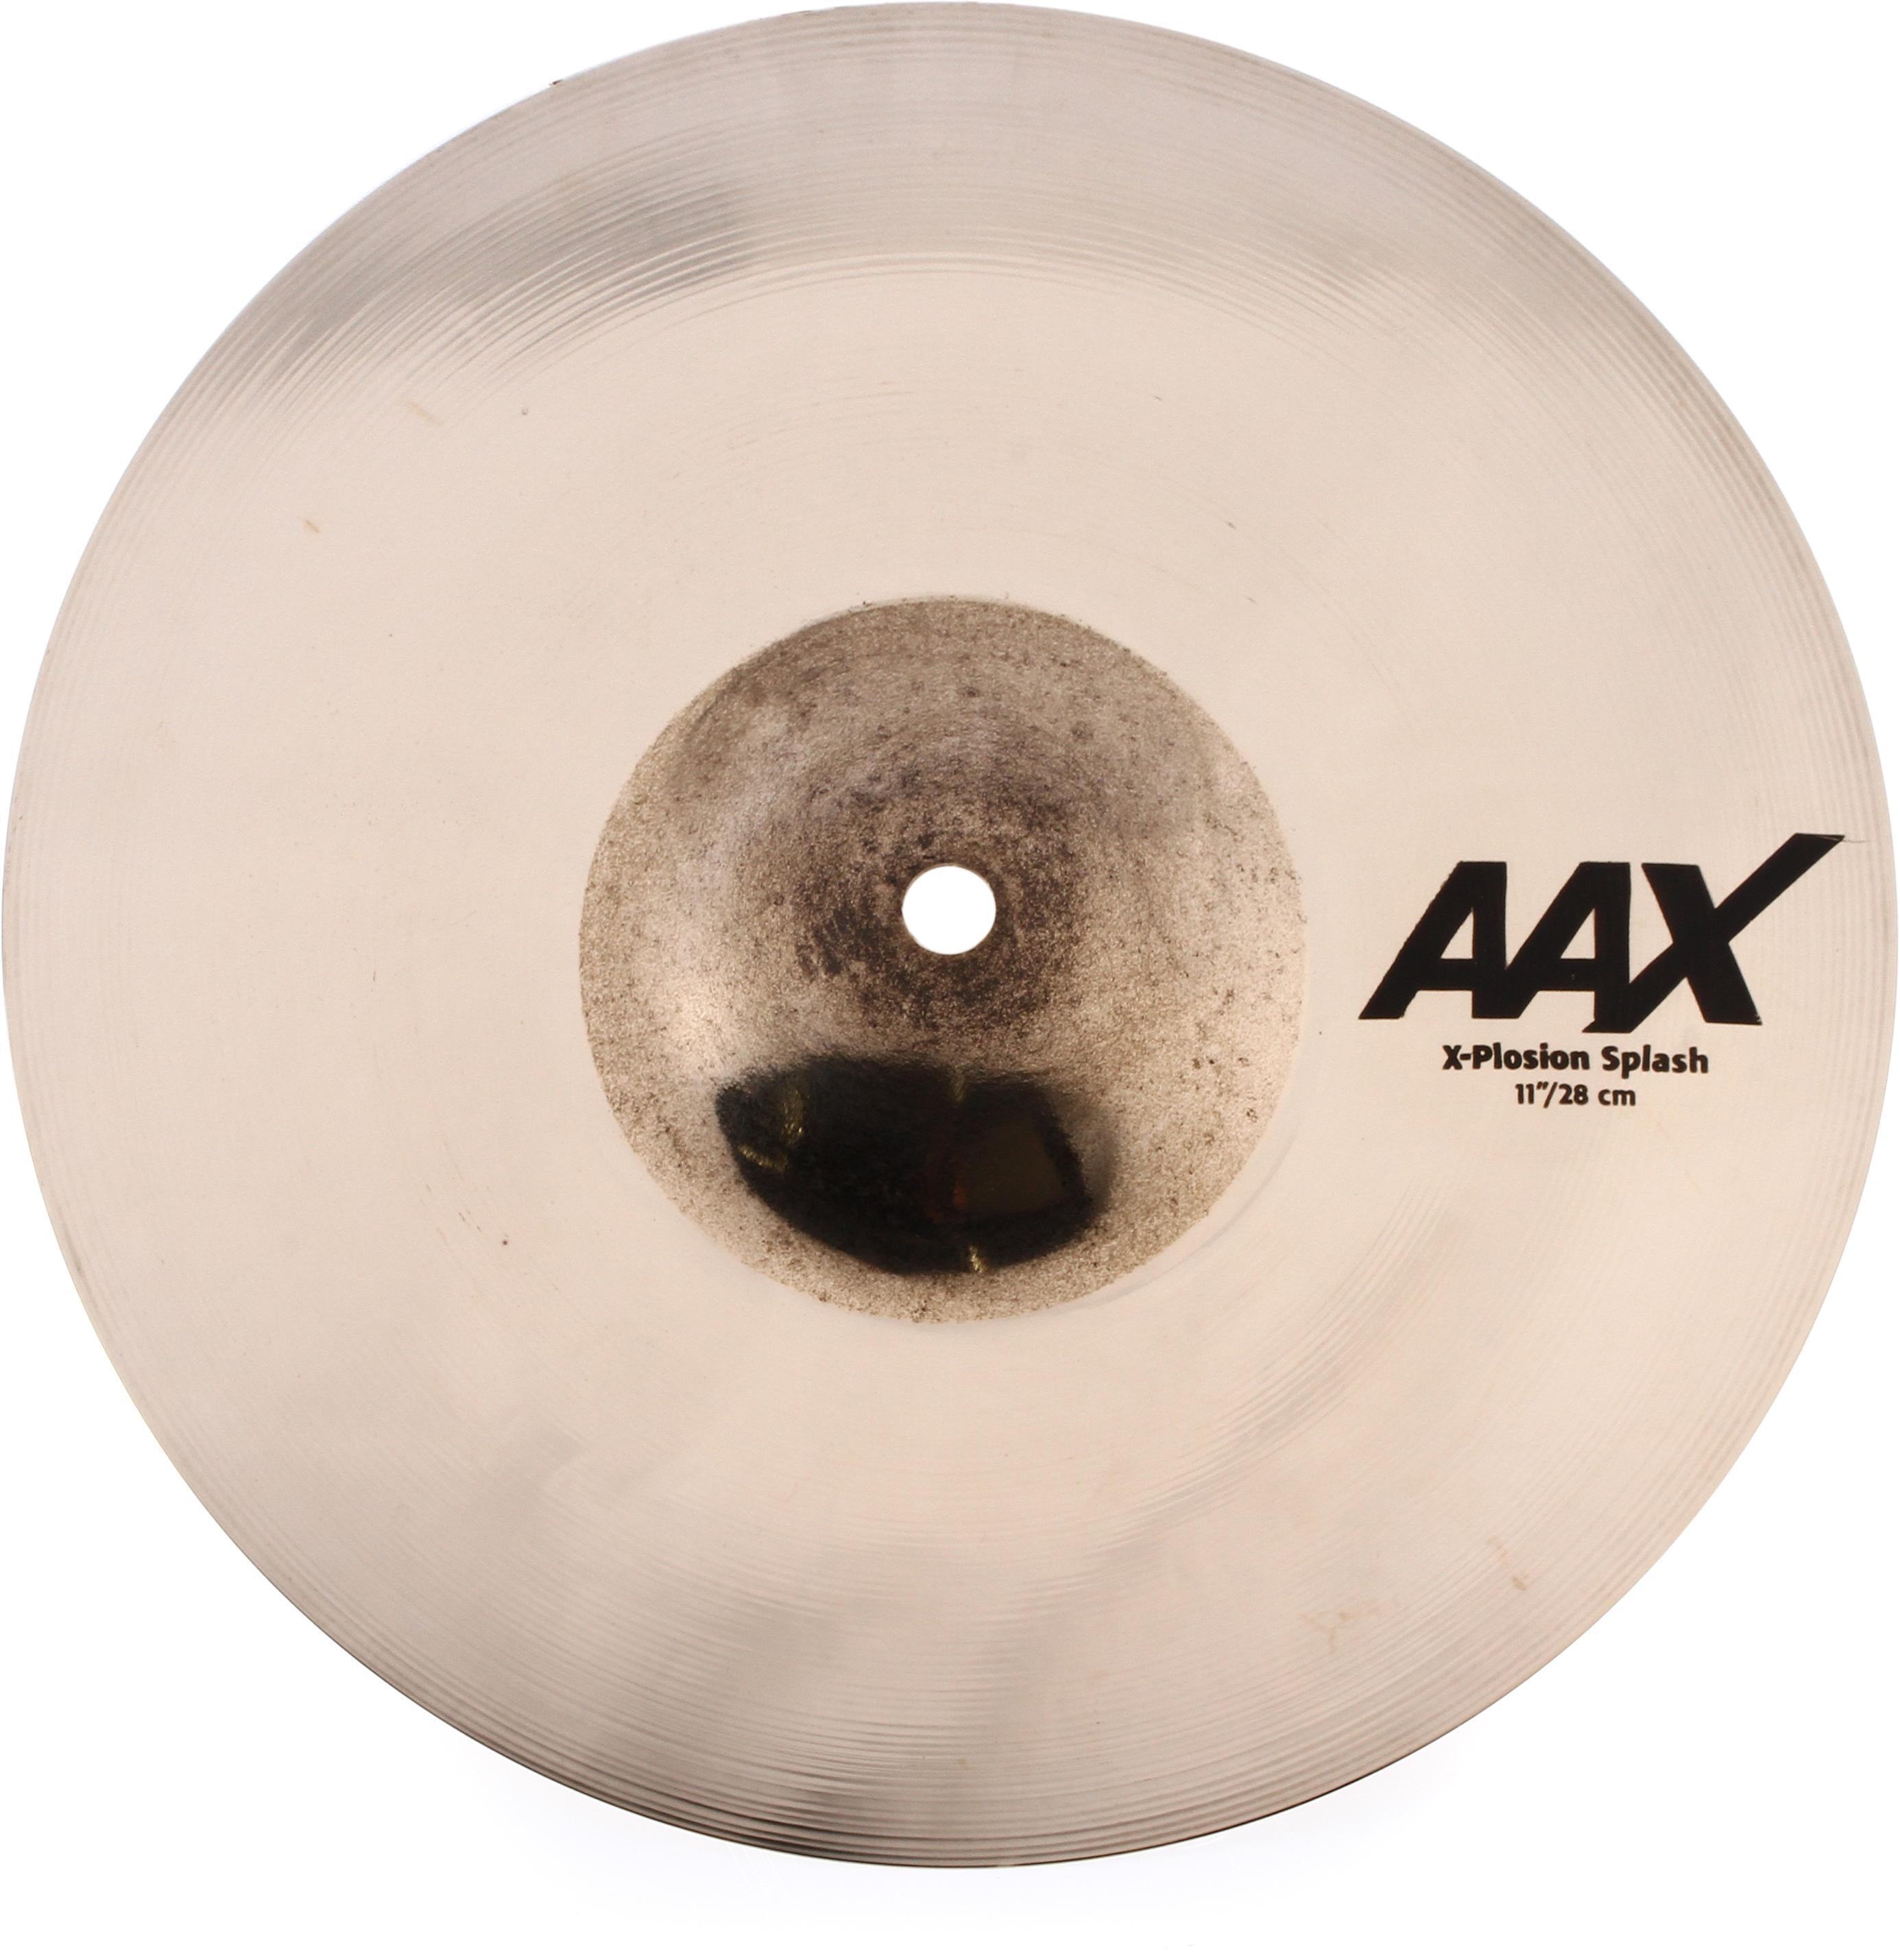 Sabian 11-inch AAX X-Plosion Splash Cymbal - Brilliant Finish